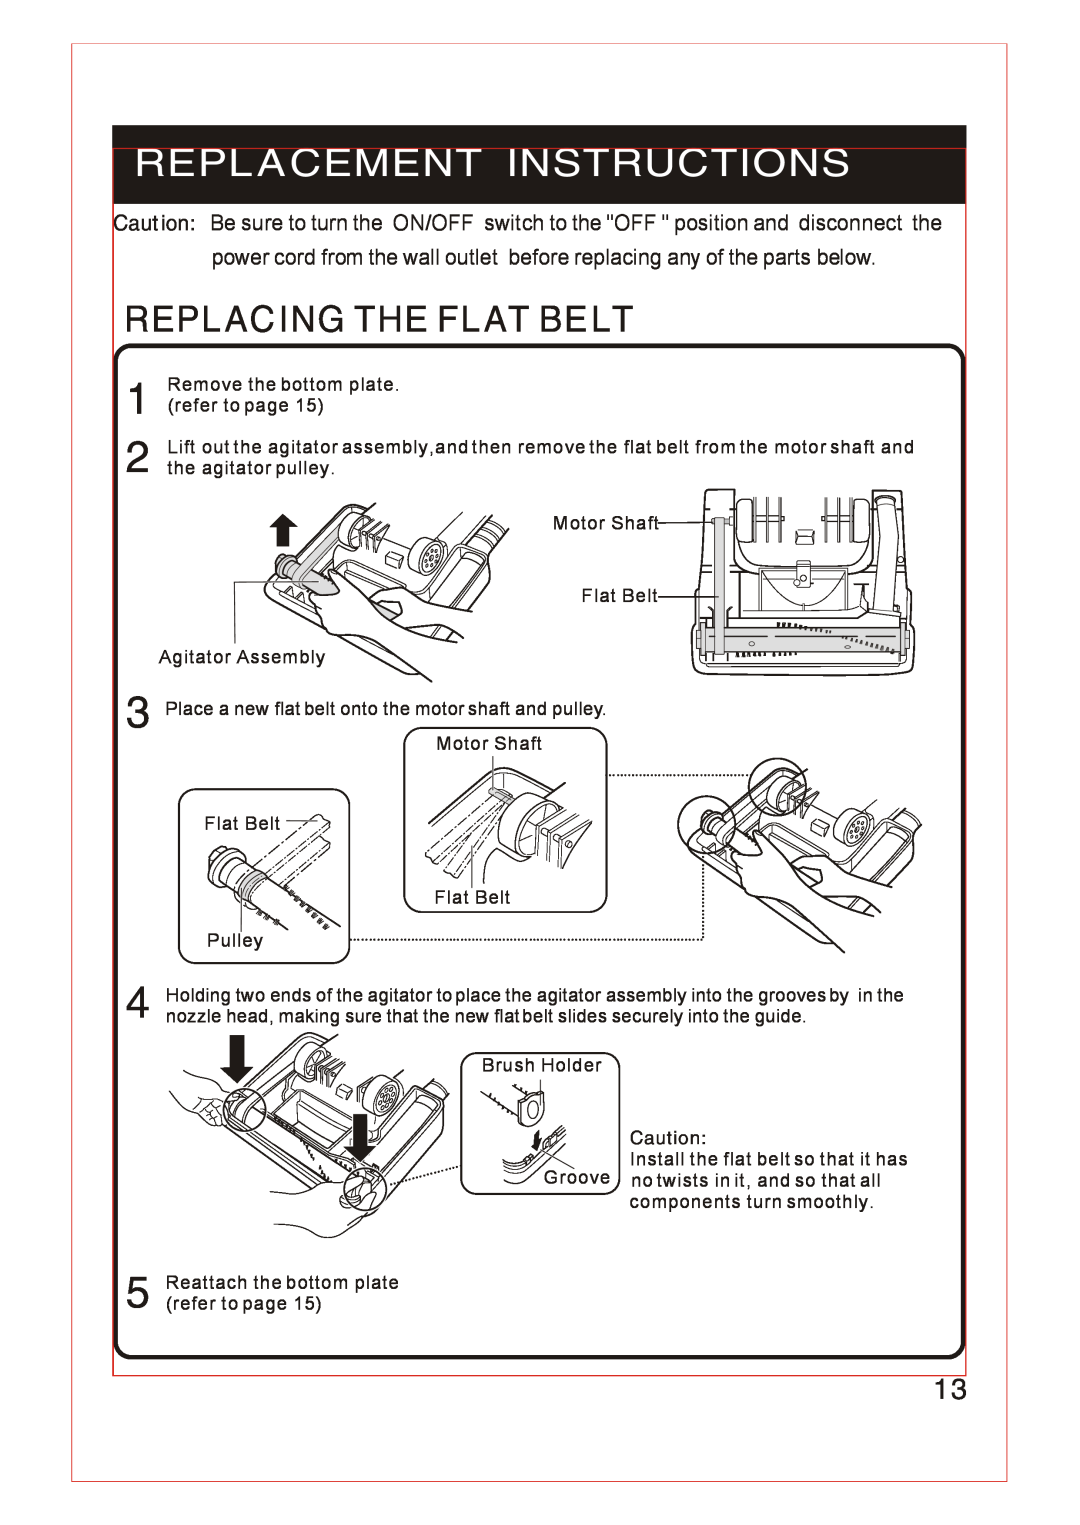 Fantom Vacuum FM740 instruction manual Replacement Instructions, Replacing The Flat Belt 